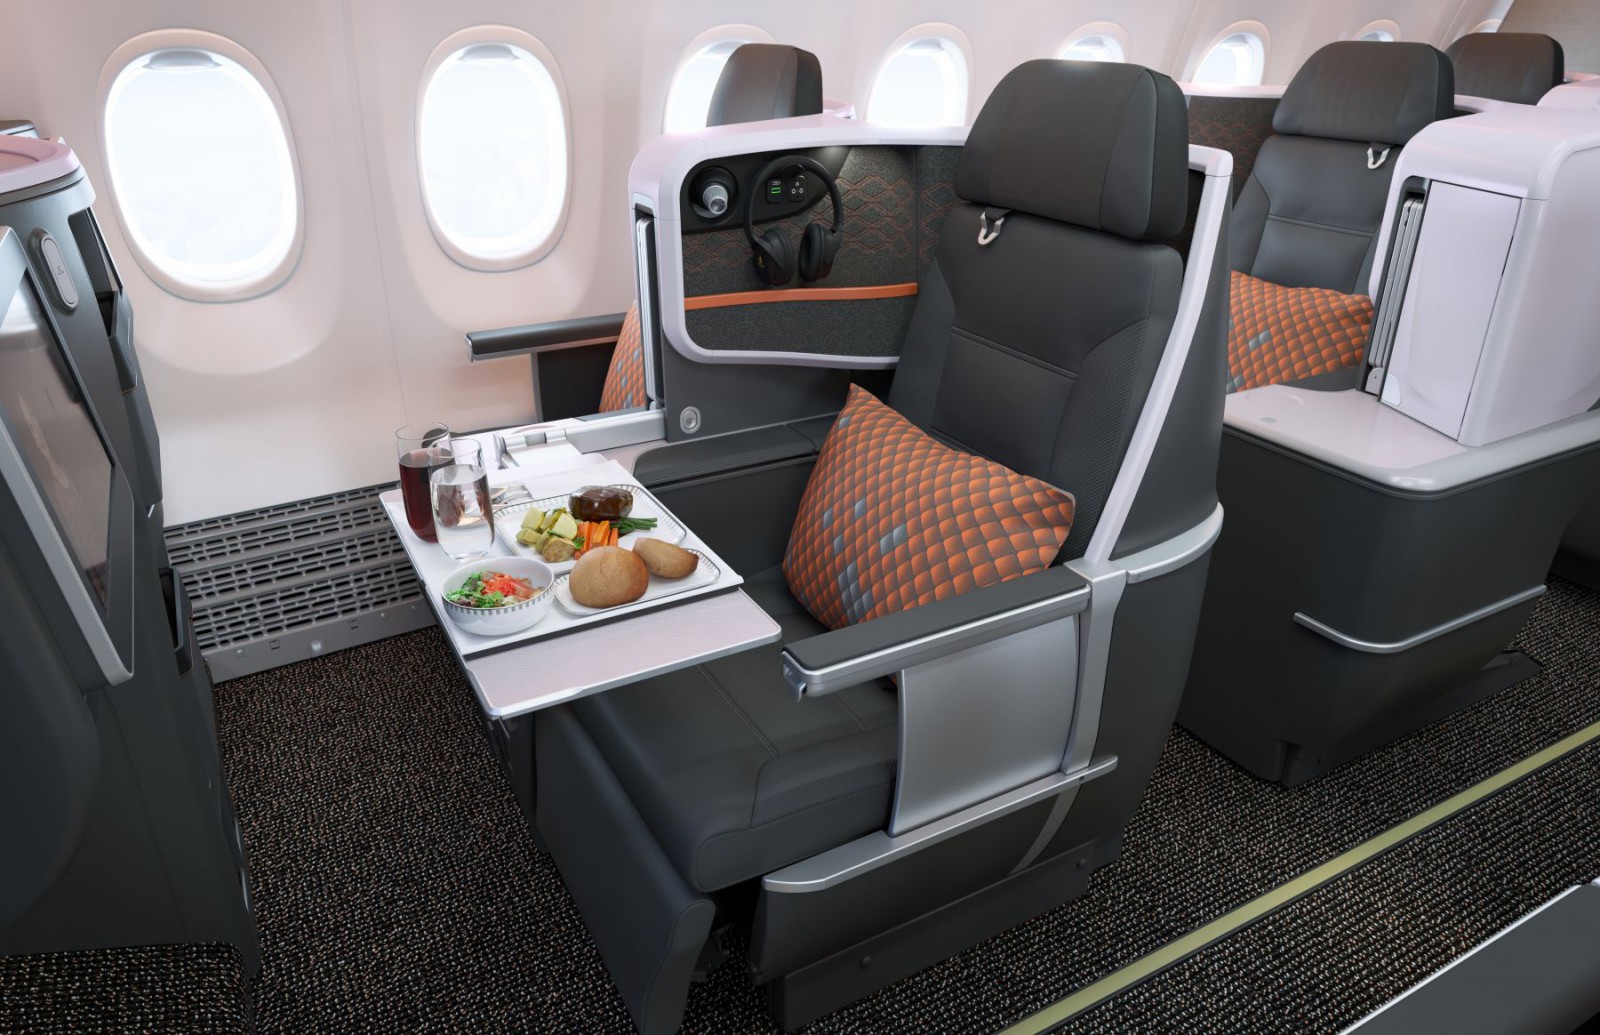 737 8 Business Class Front Seat with Meal الخطوط الجوية السنغافورية تضيف الريتز إلى طائراتها 737